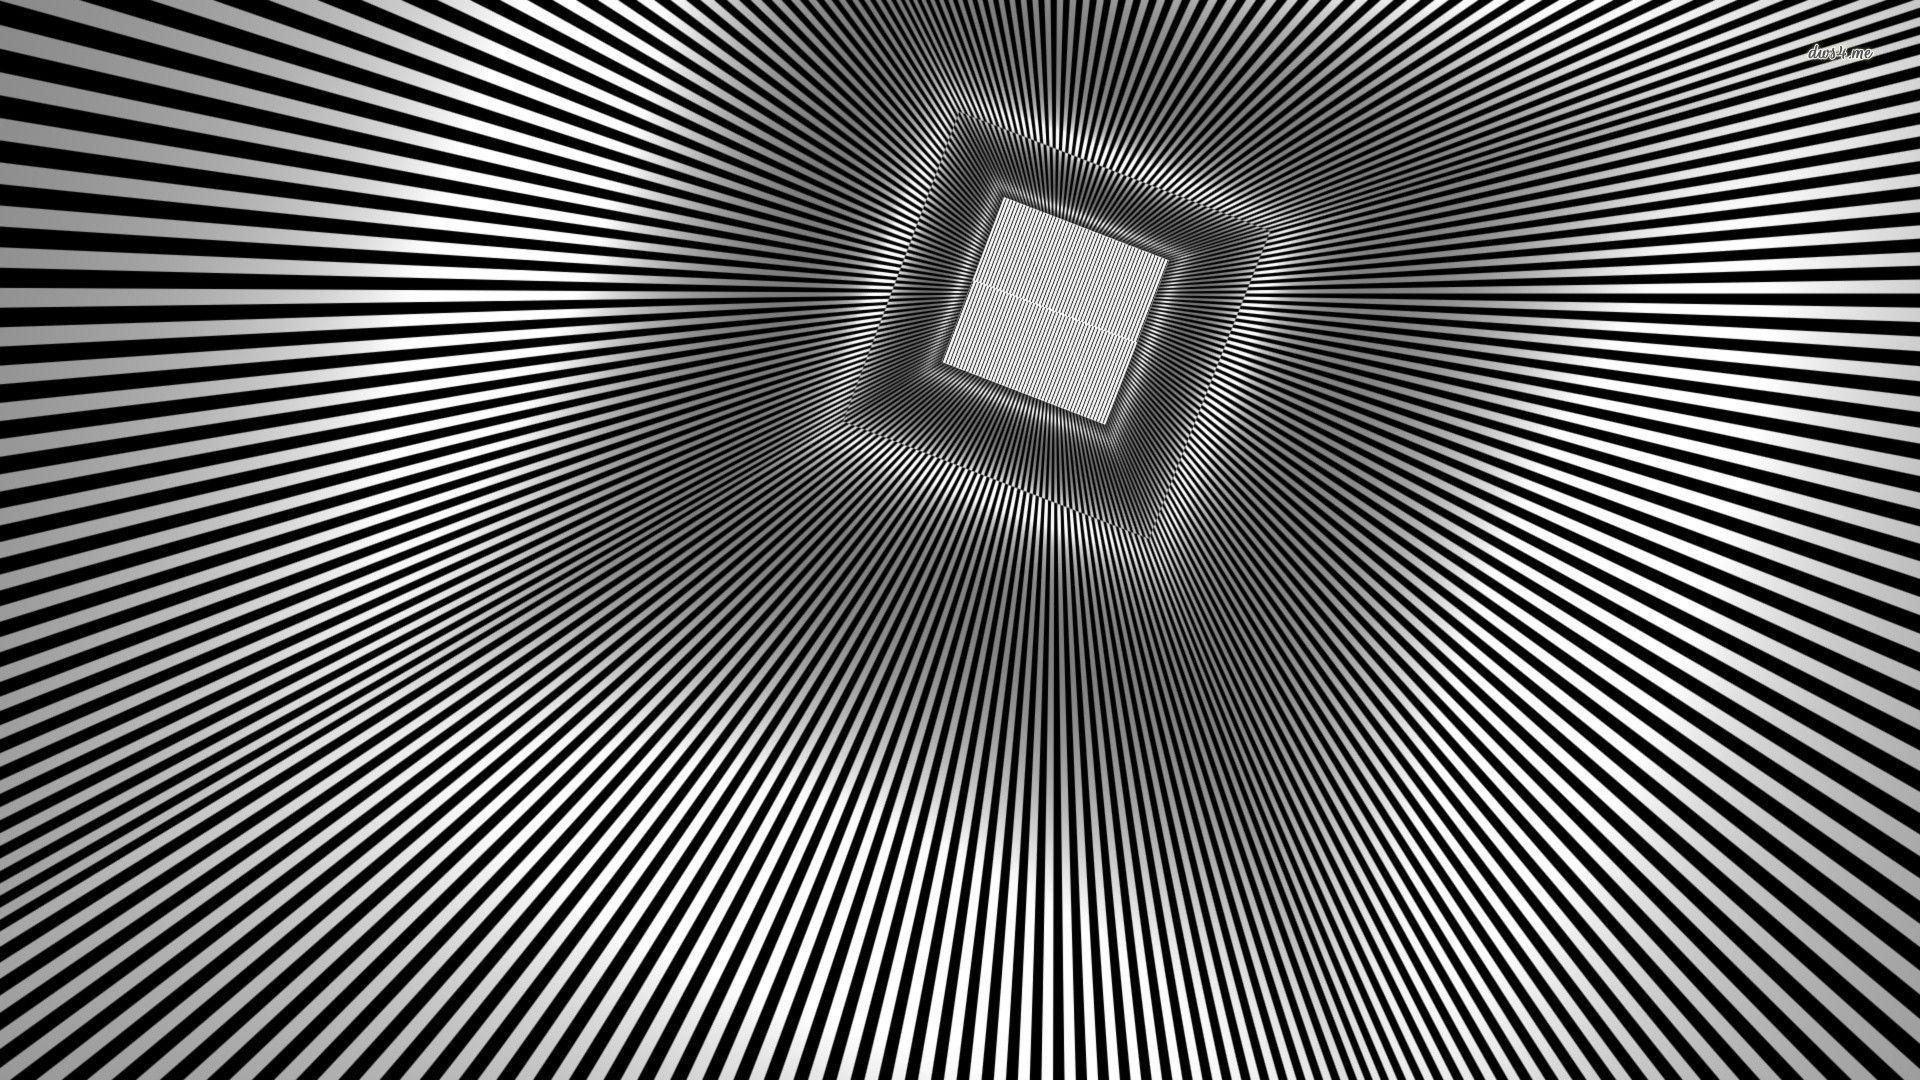 Wallpaper Wall 3d Illusion Image Num 36